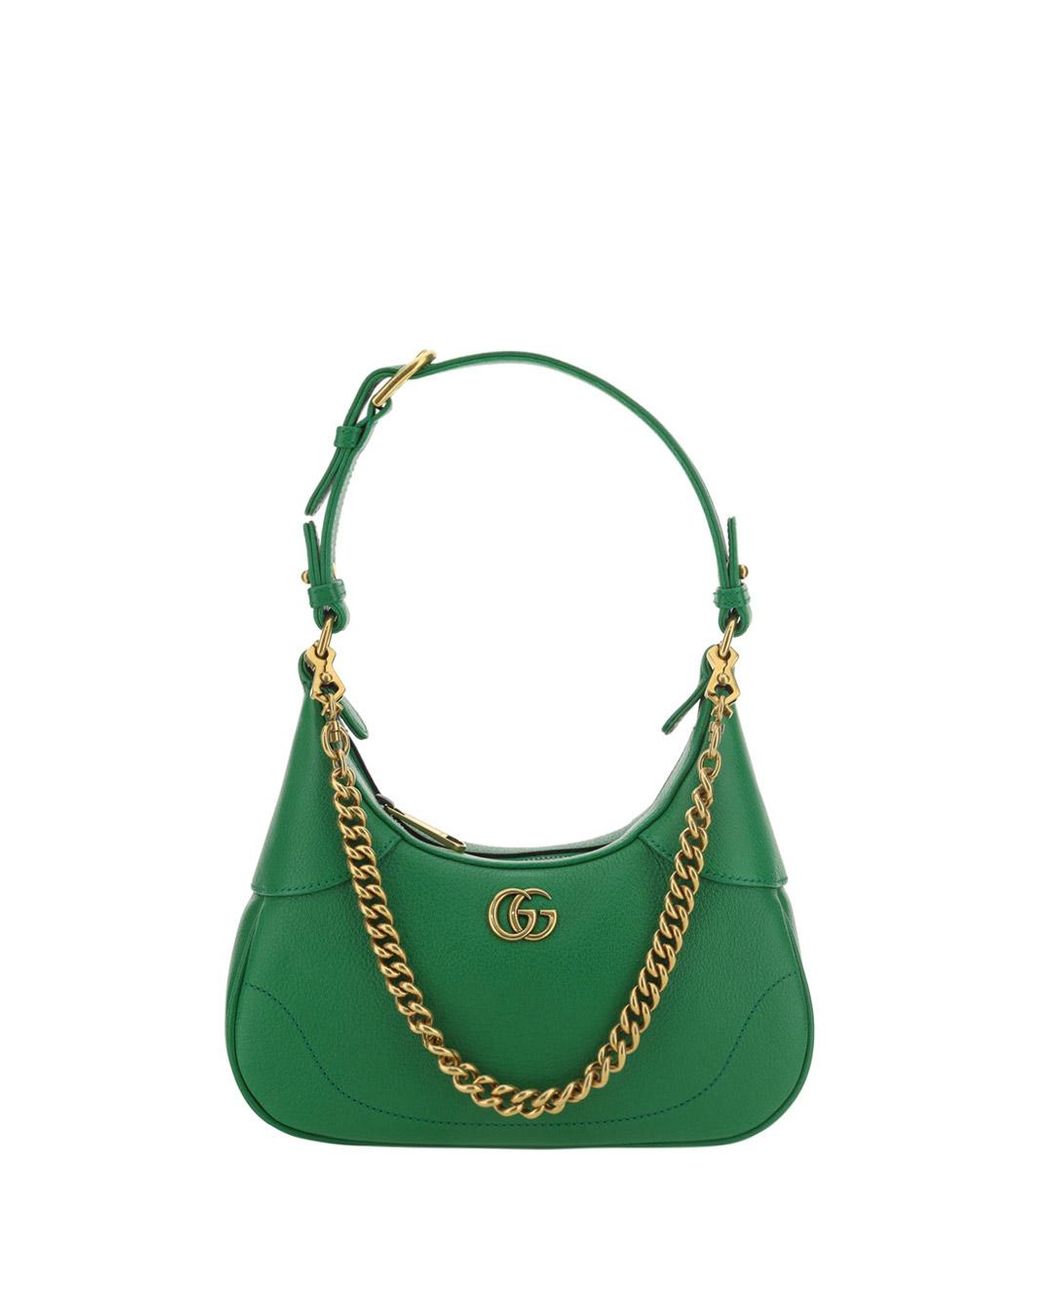 Gucci Bouvier Shoulder Bag in Green | Lyst